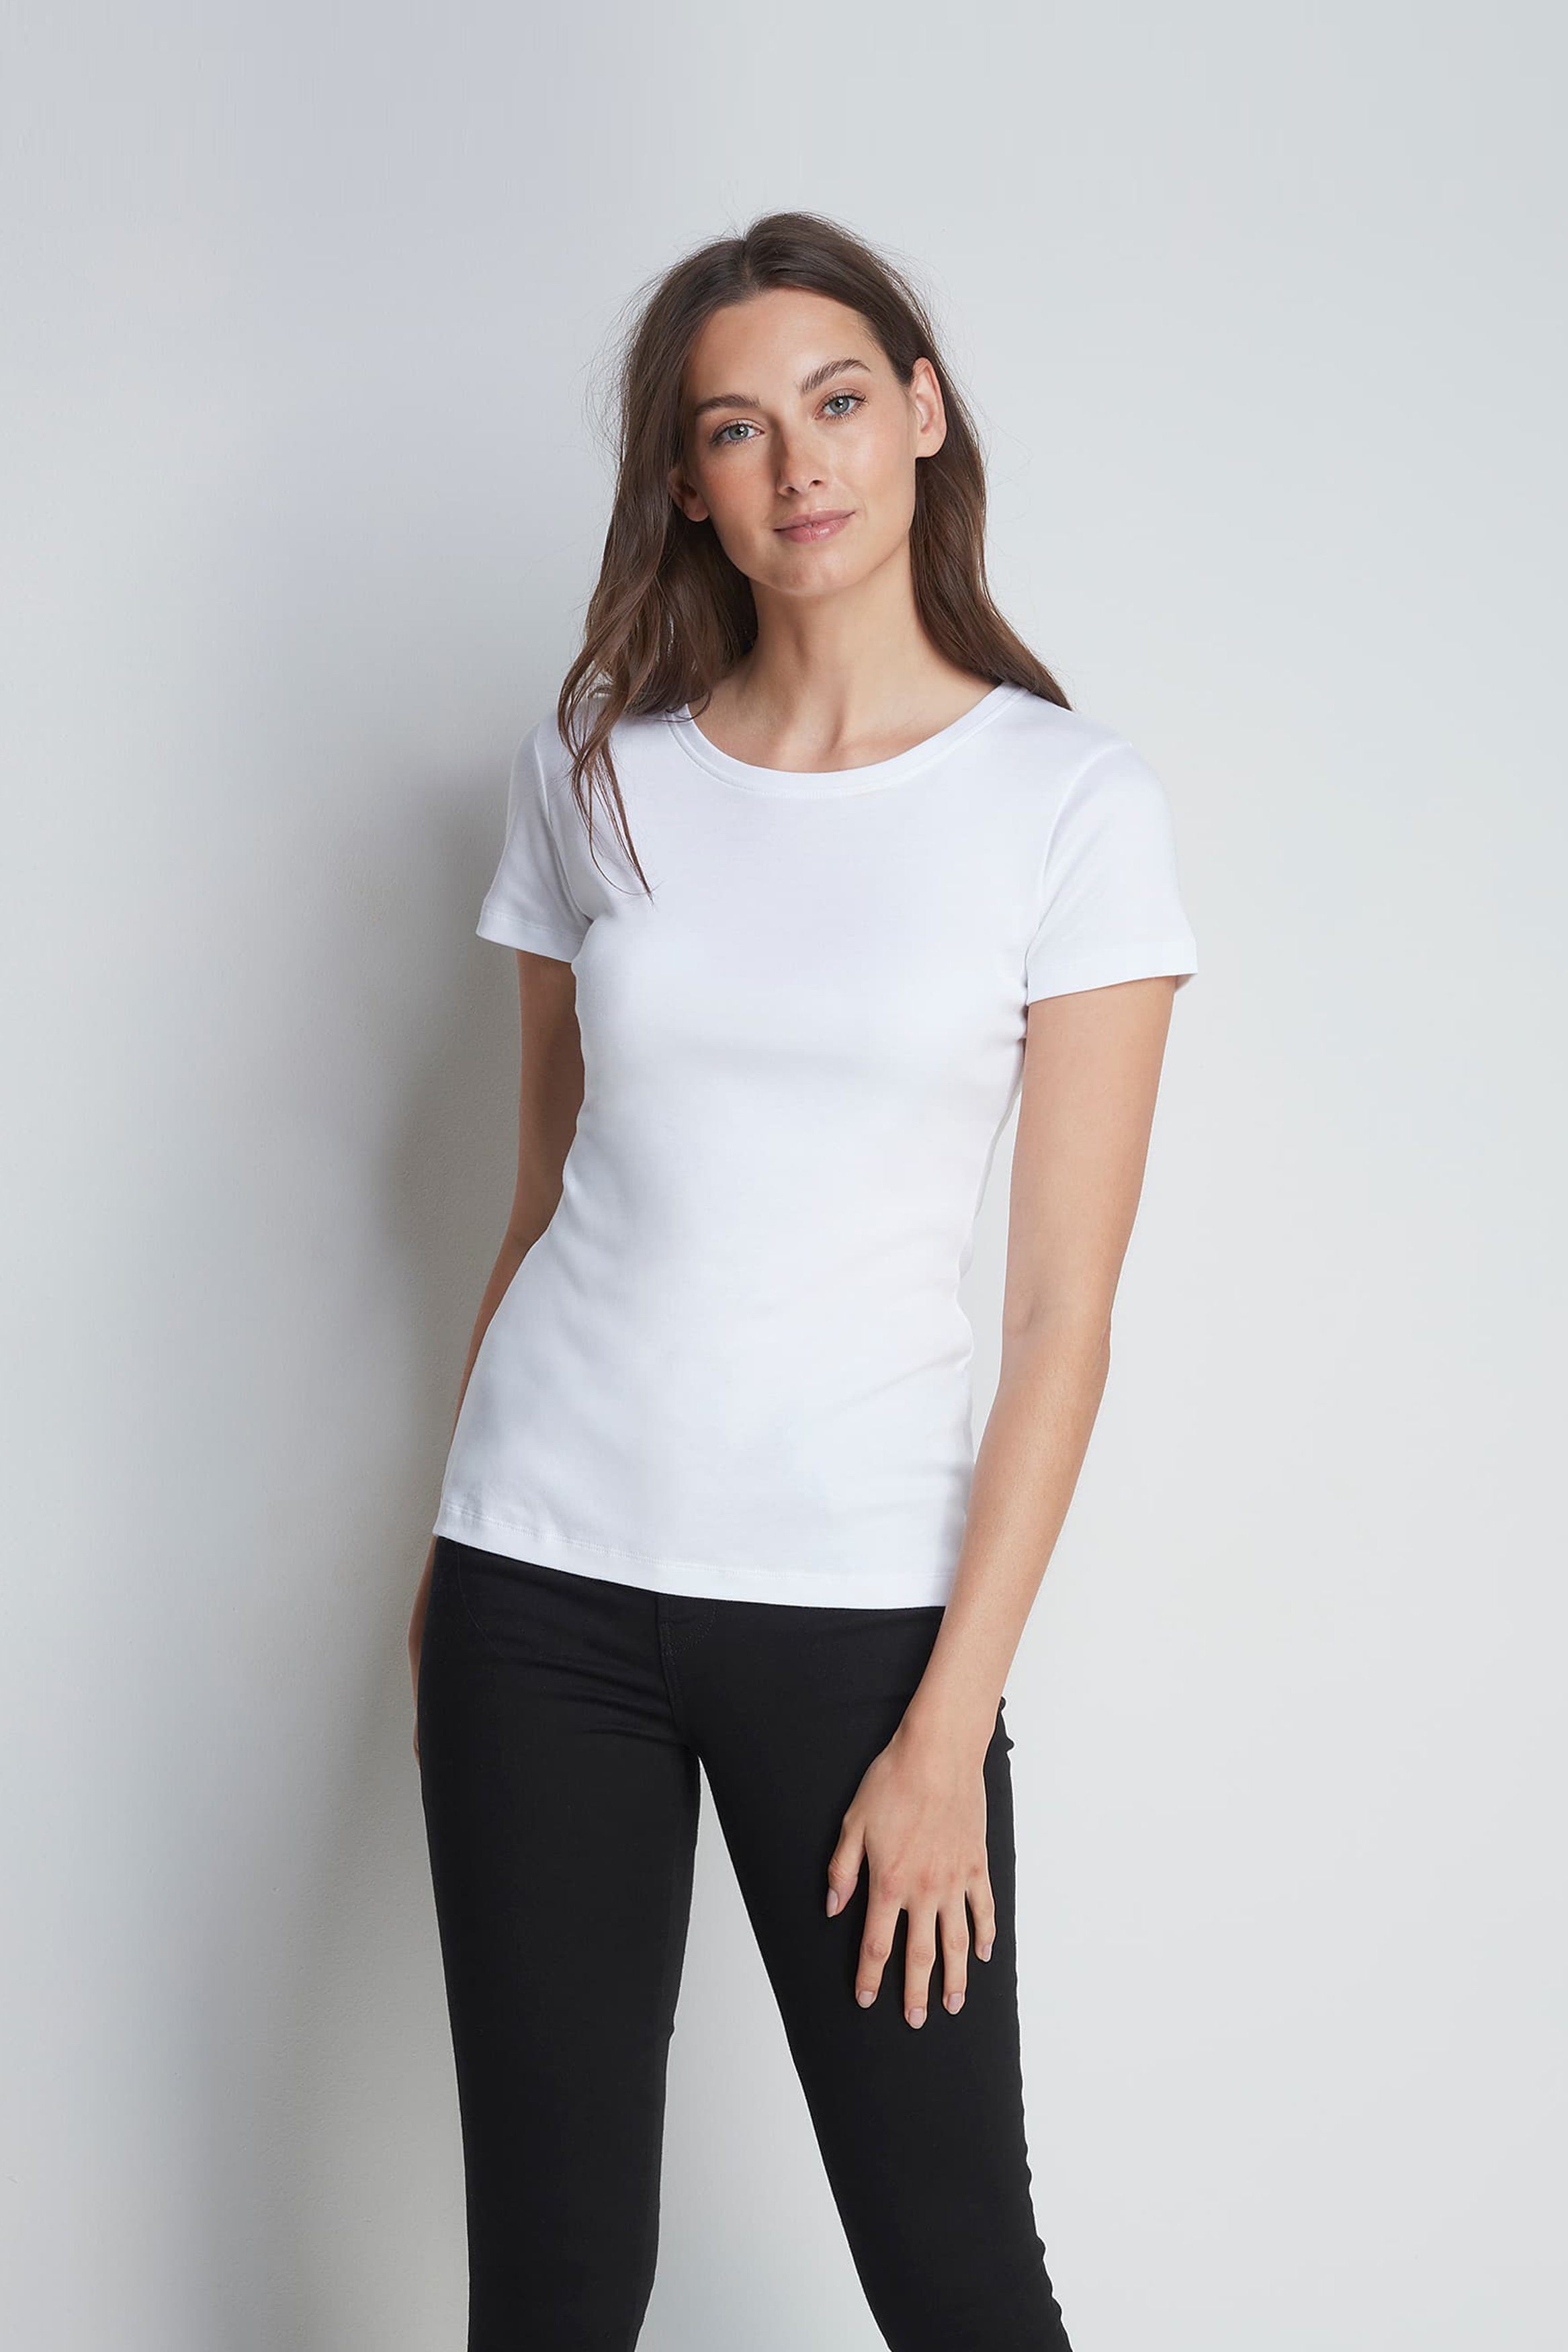 T-shirt Blend Clothing Cotton Short | Neck Modal Crew Hill Lavender Sleeve